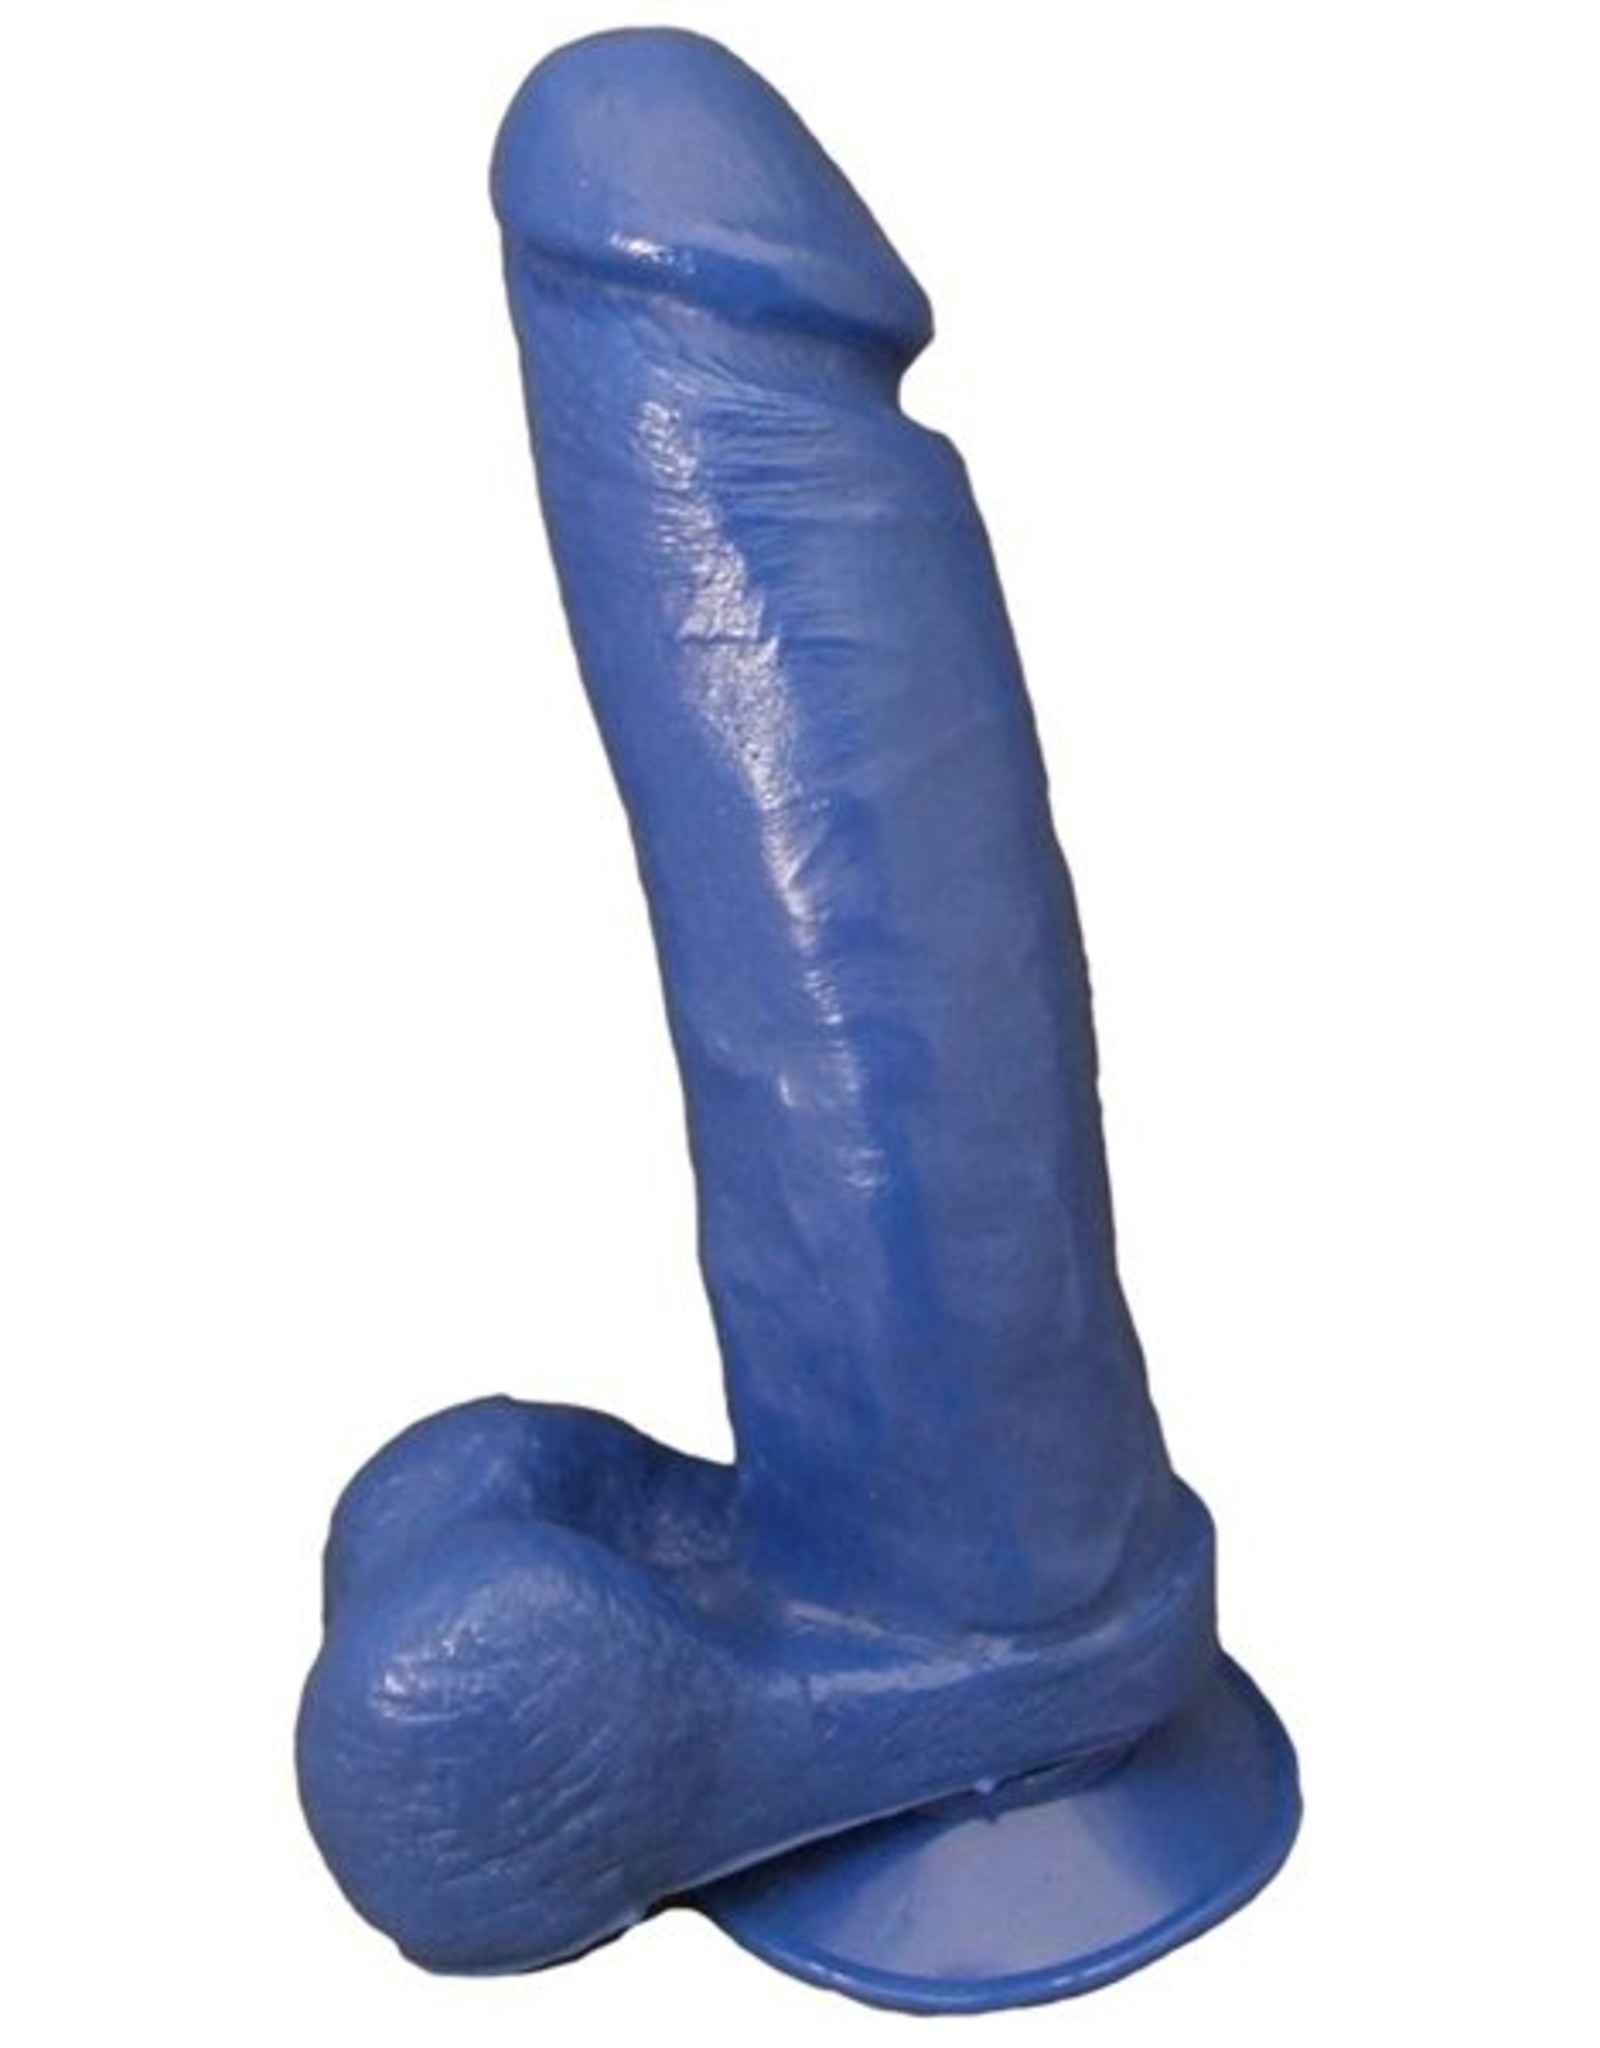 Gode bleu avec couilles 20 cm